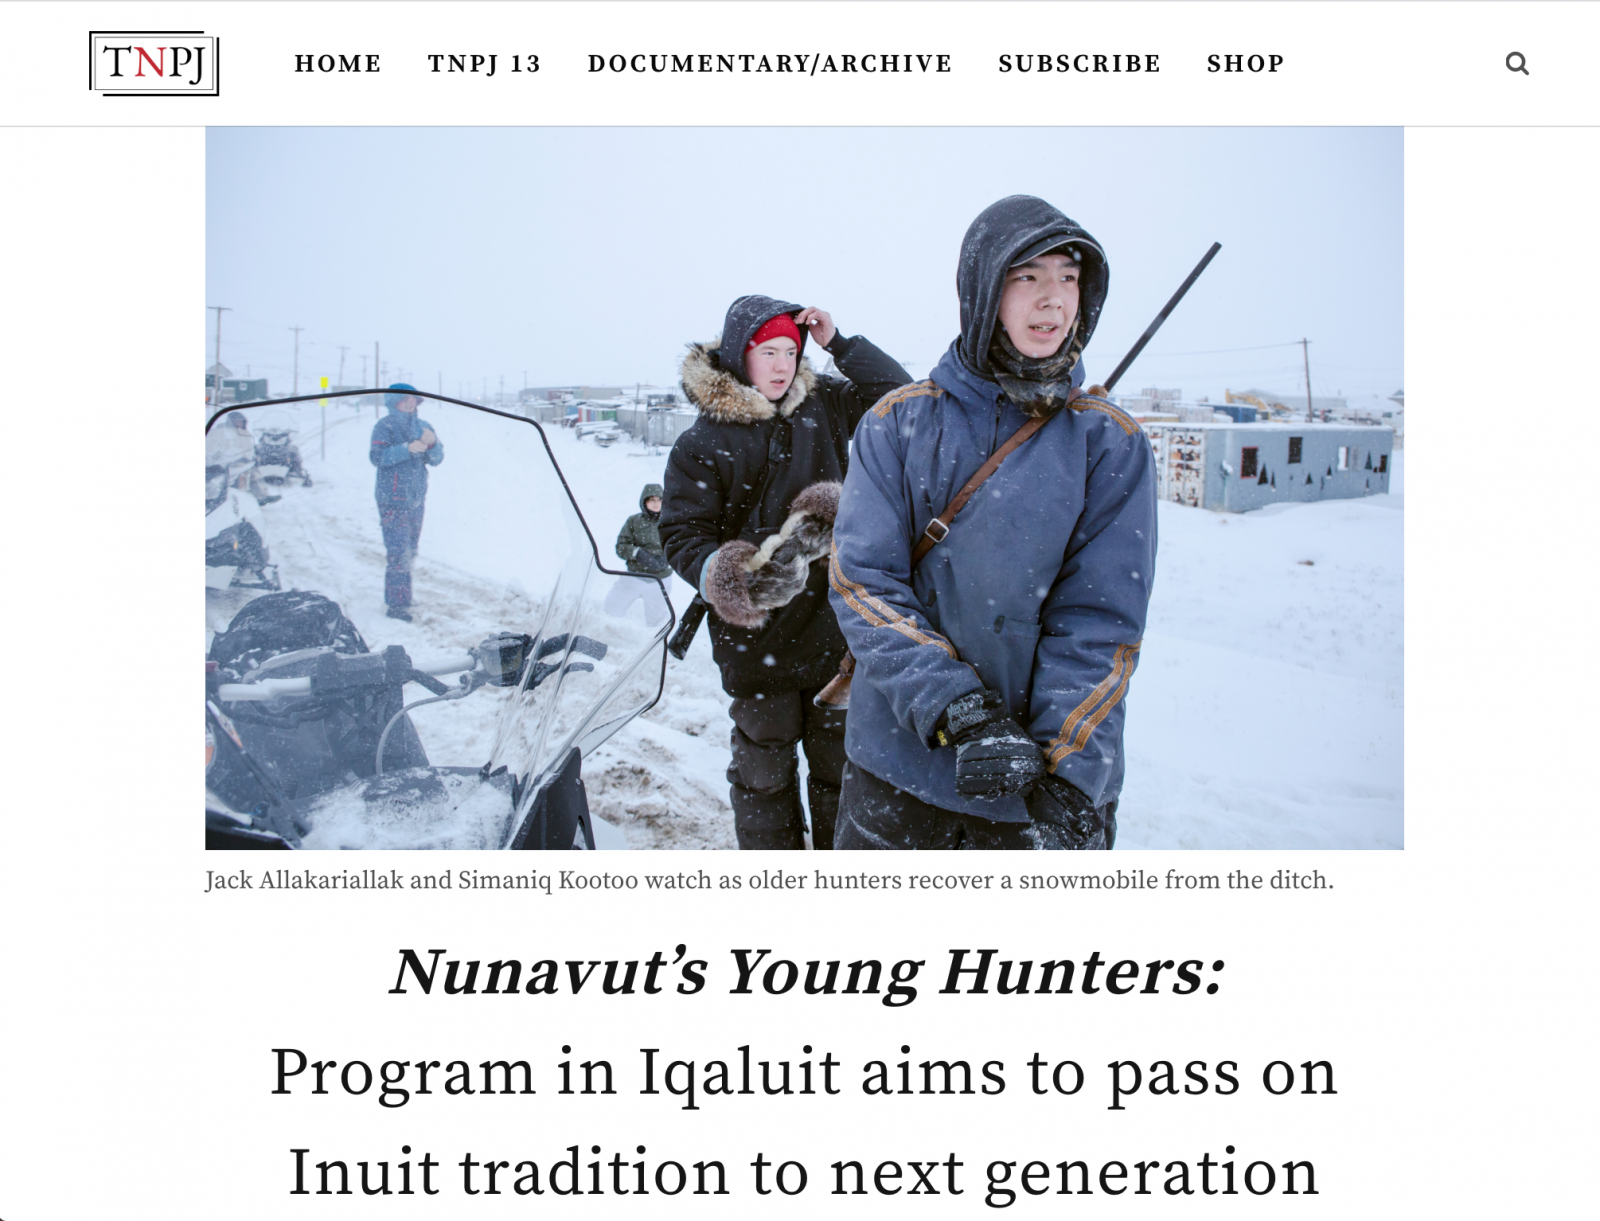 Nunavut's Young Hunters